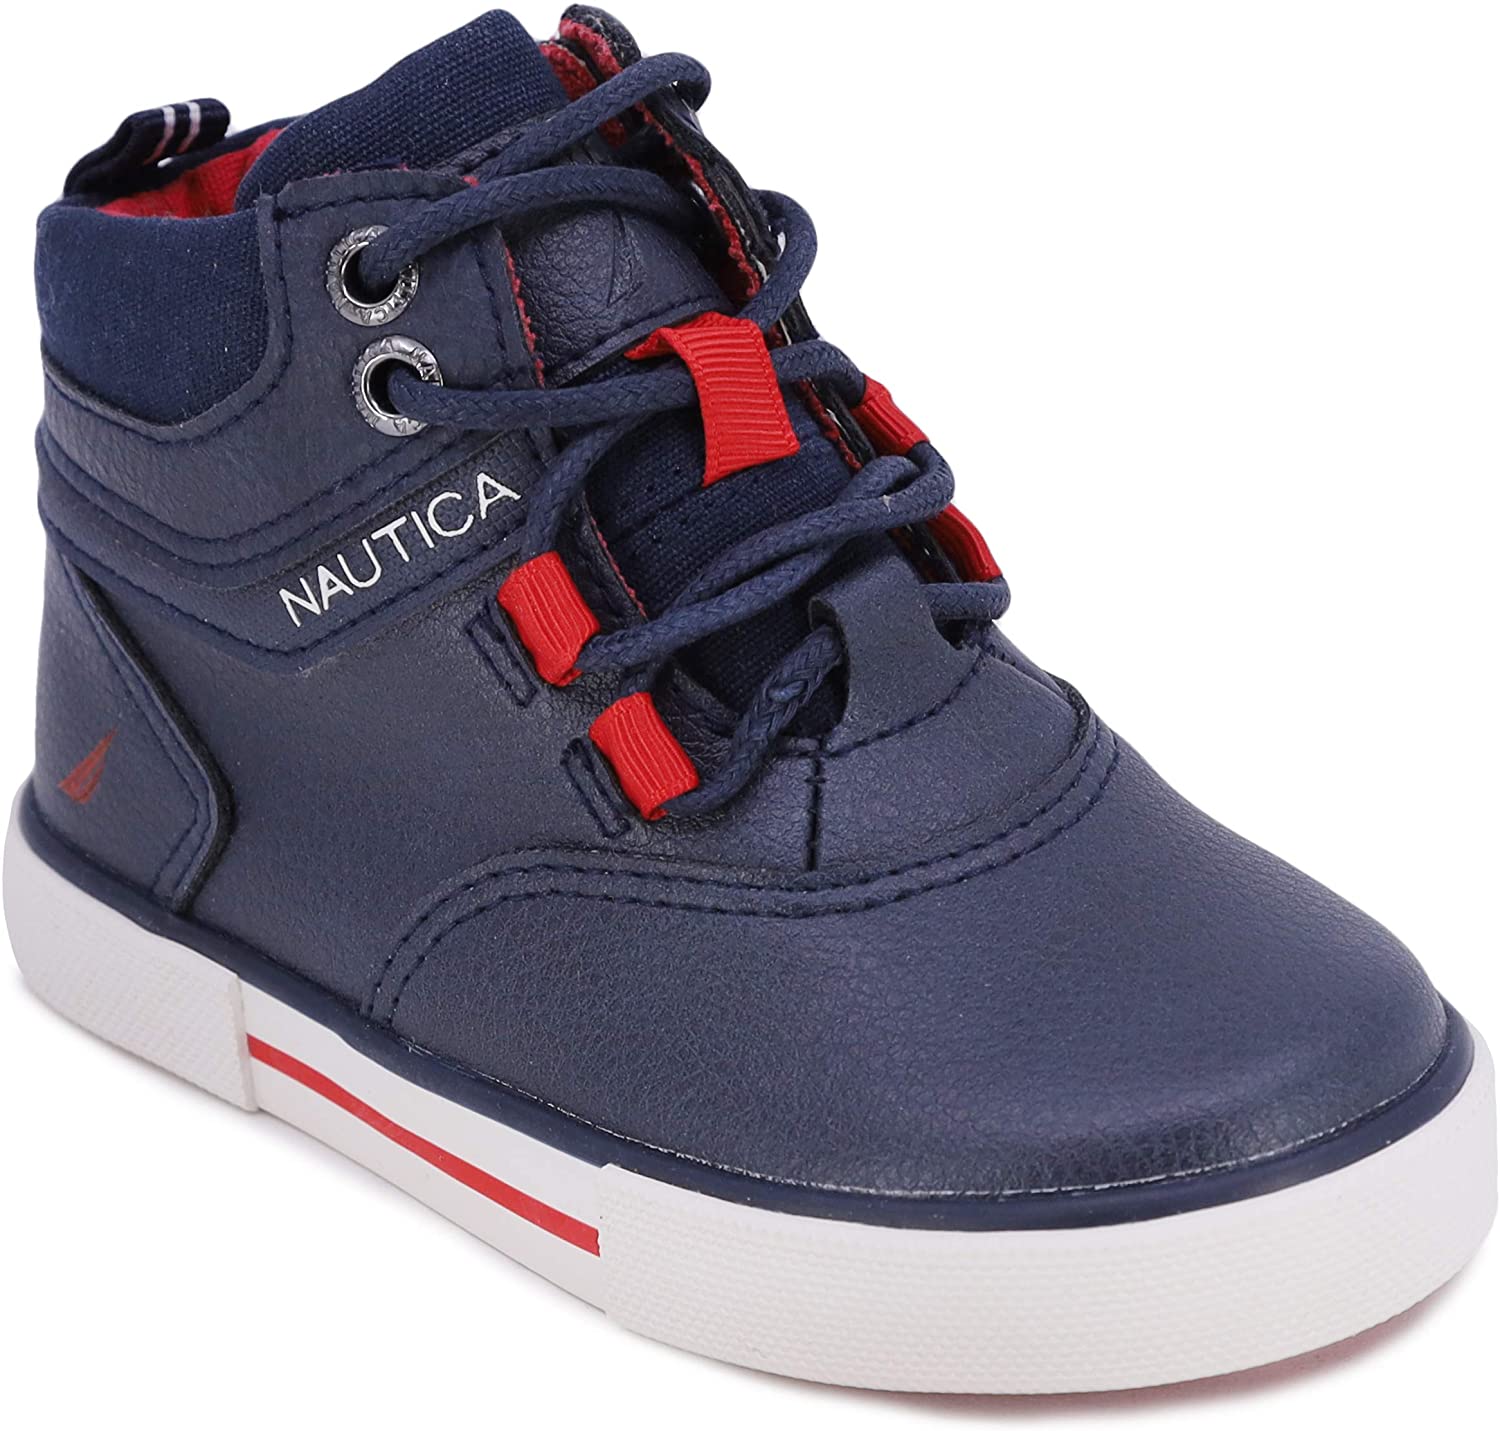 Nautica Unisex-Child Leeway Toddler Sneaker